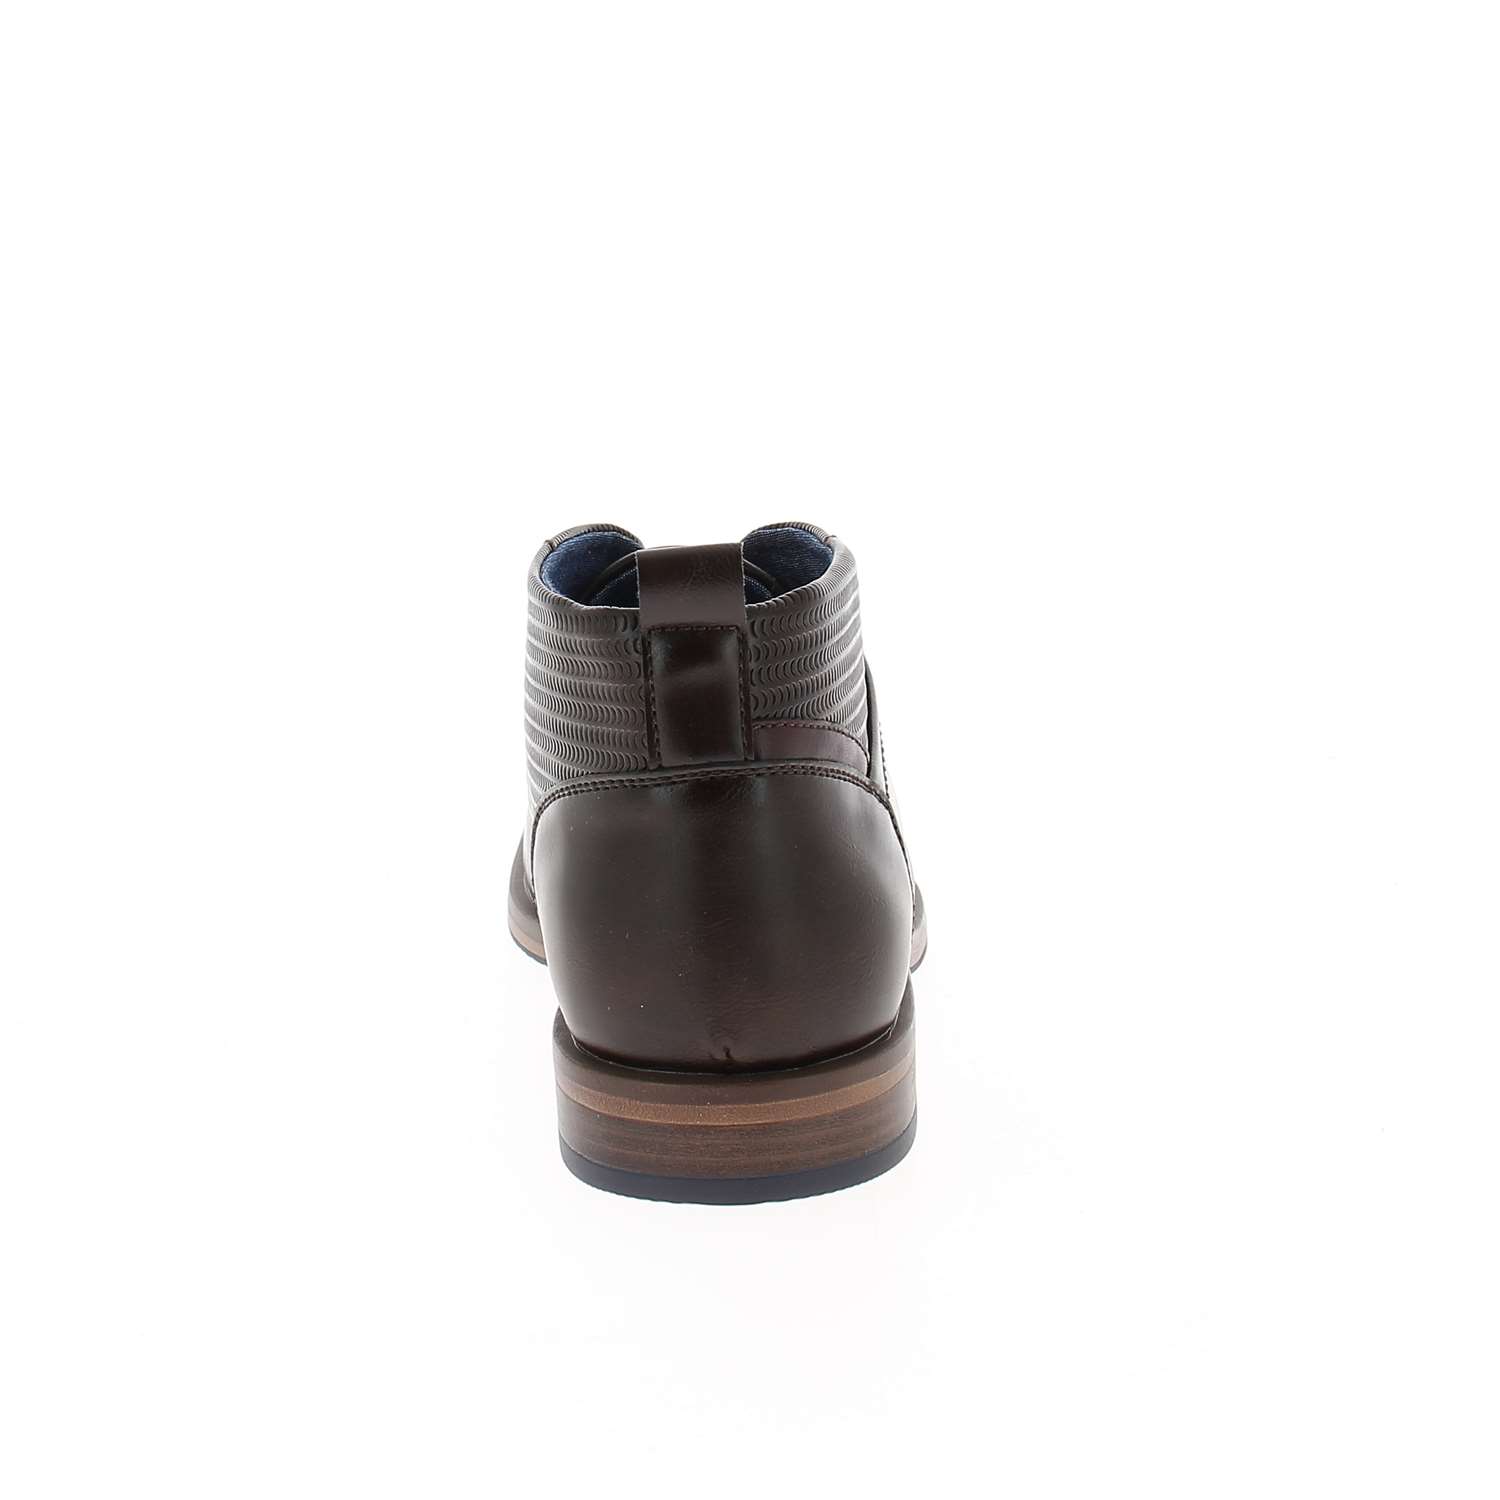 04 - KERCHIC - XAPI - Boots et bottines - Textile